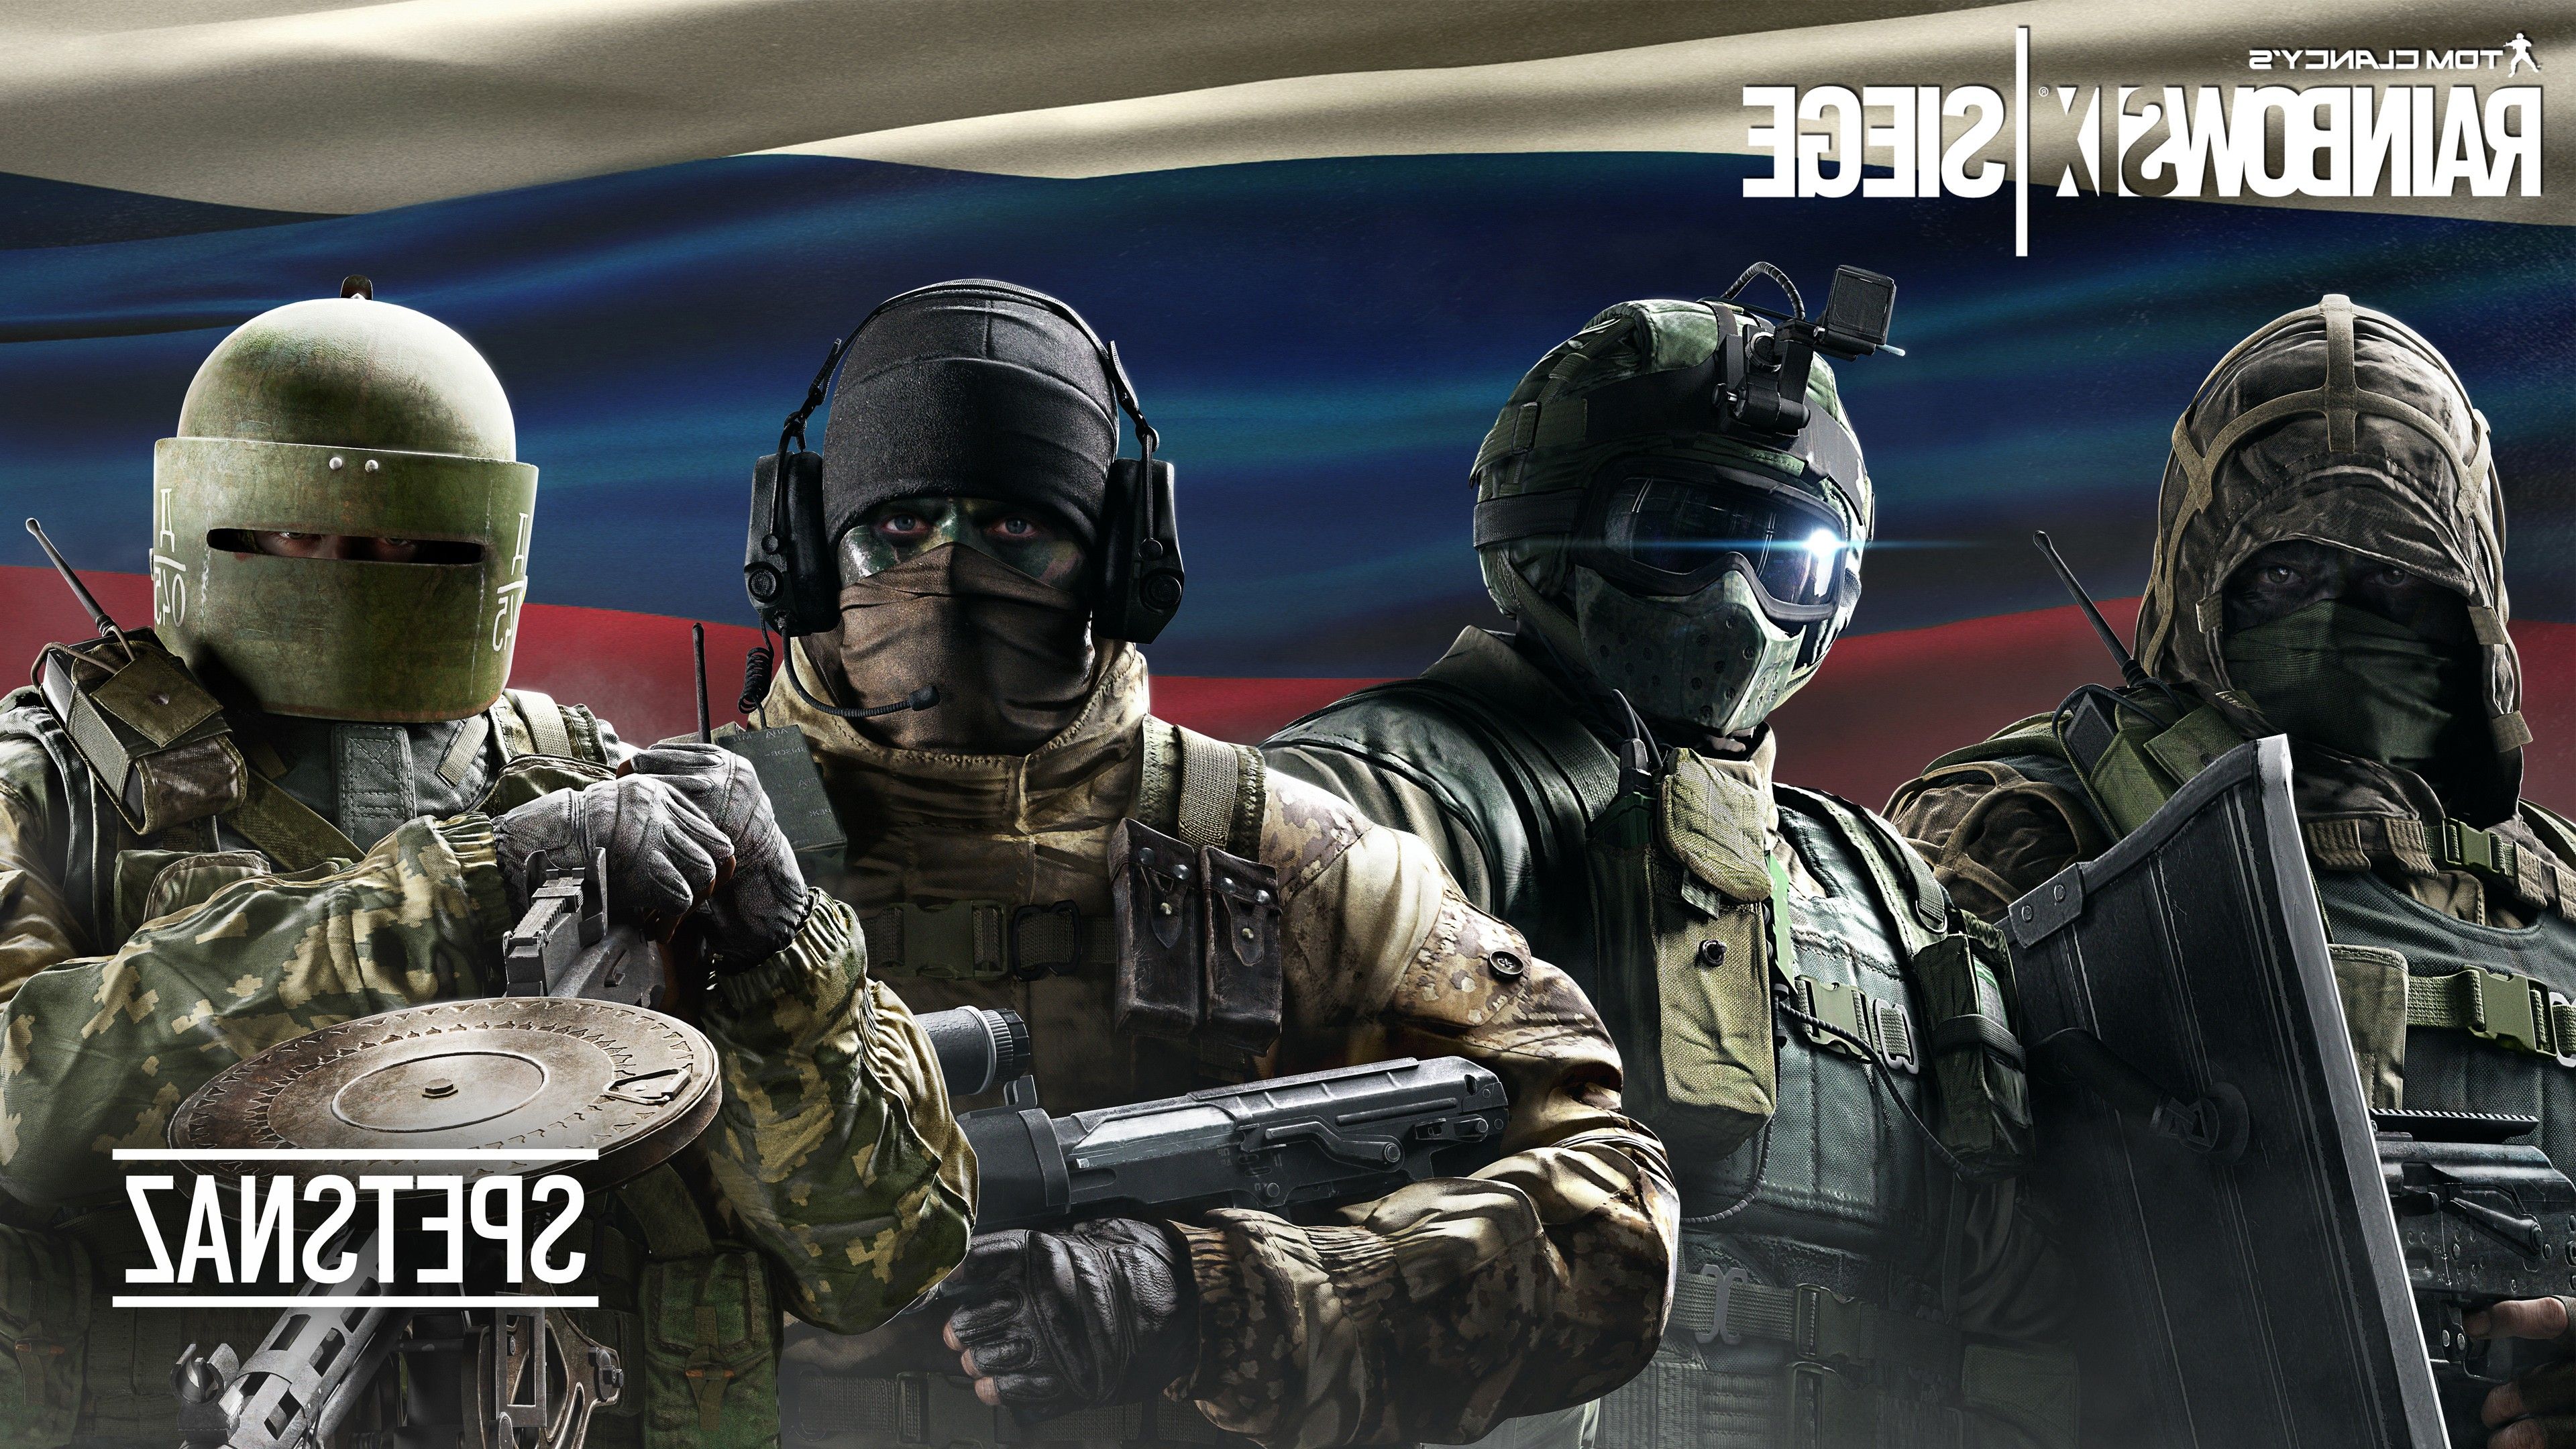 Wallpapers 4k Tom Clancys Rainbow Six Siege Spetsnaz games wallpapers